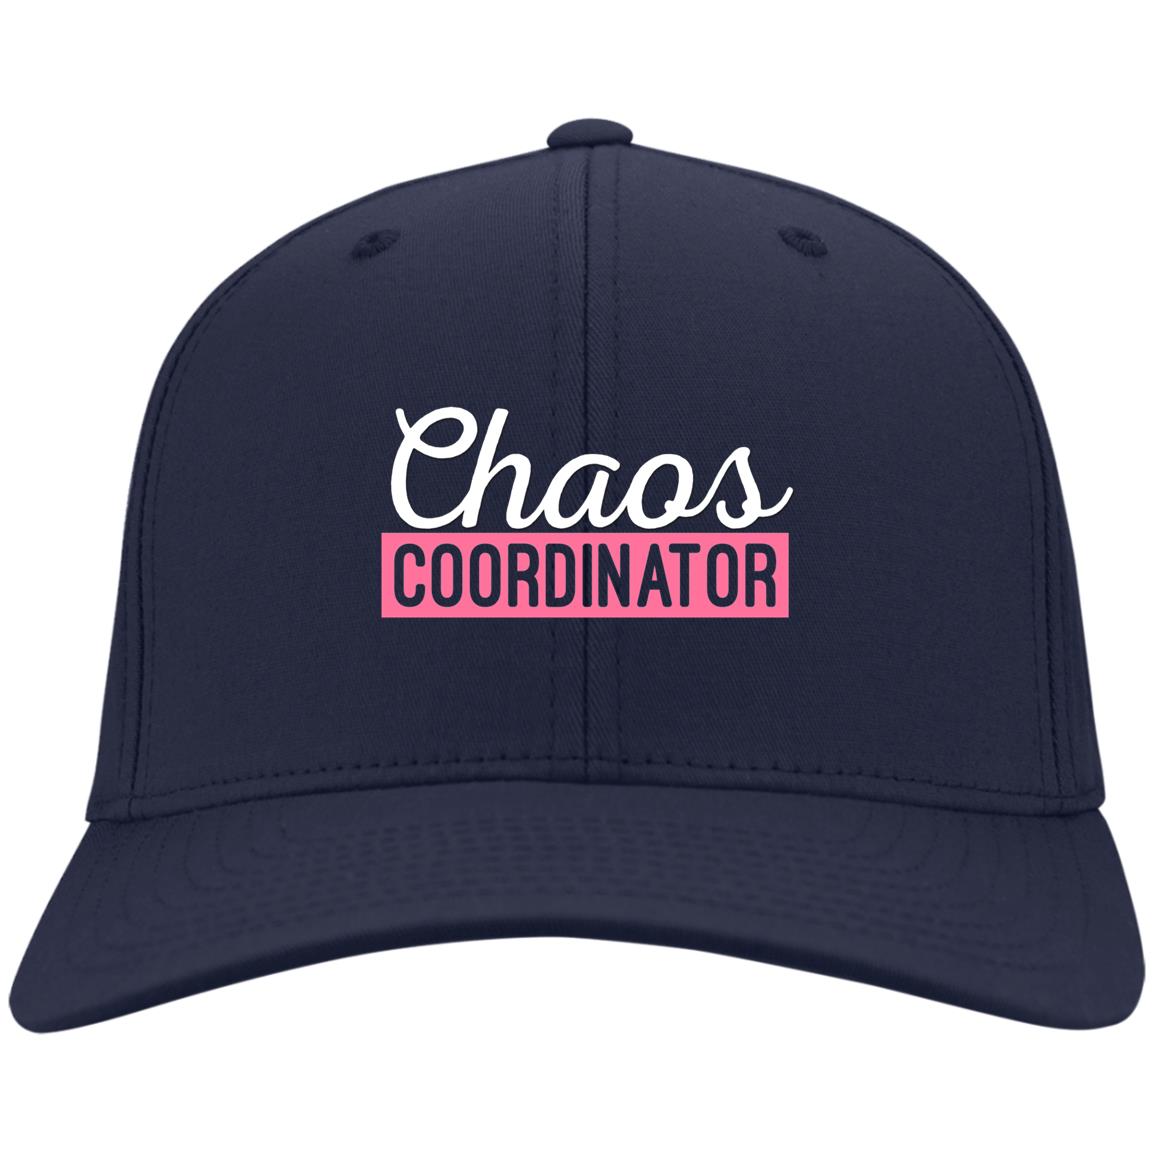 Chaos Coordinator Stylish Twill Cap